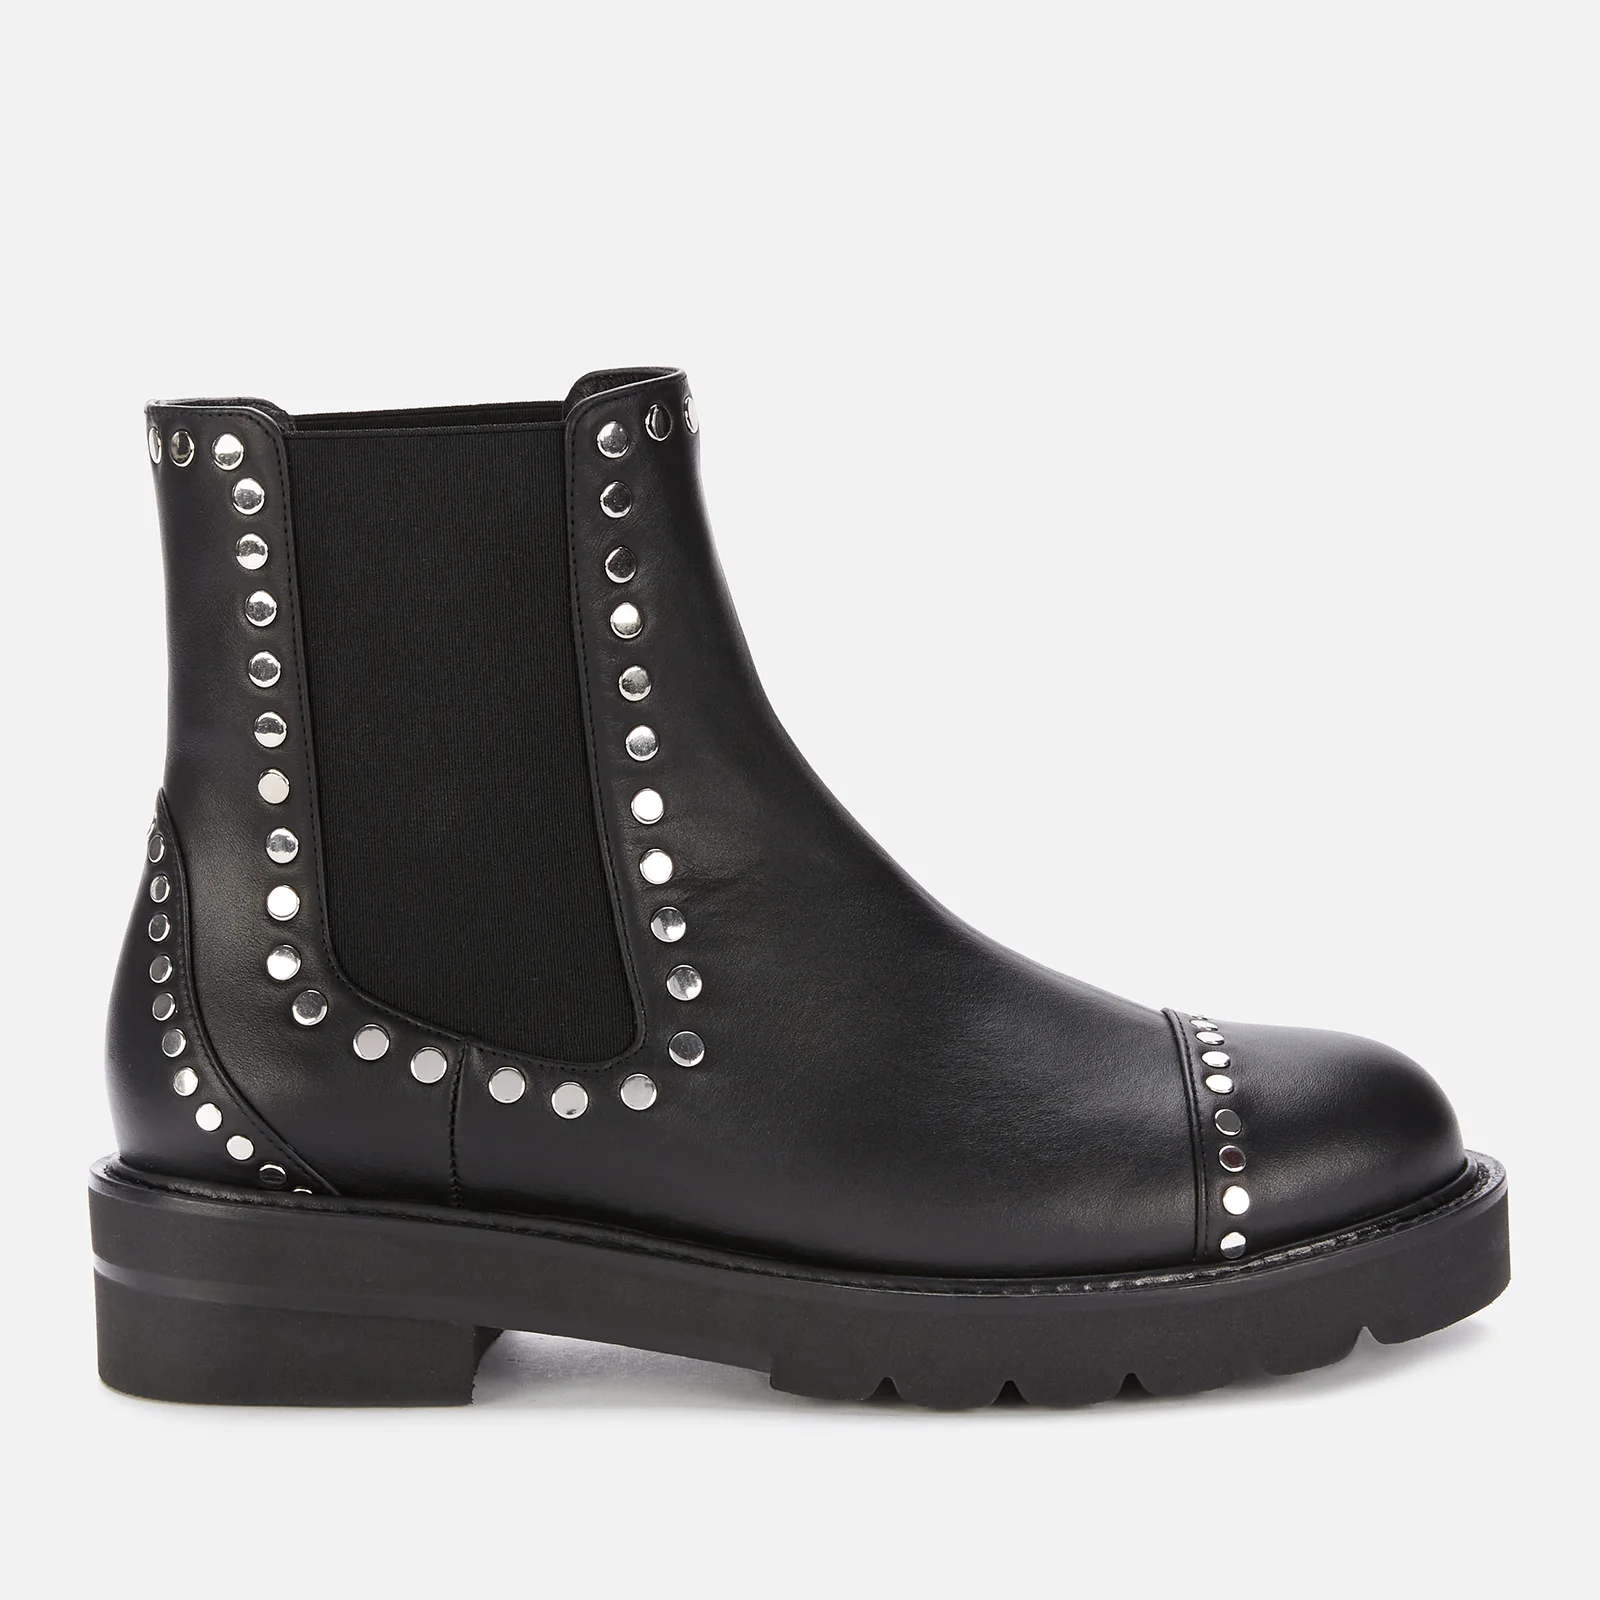 Stuart Weitzman Women's Frankie Lift Studs Leather Chelsea Boots - Black Image 1